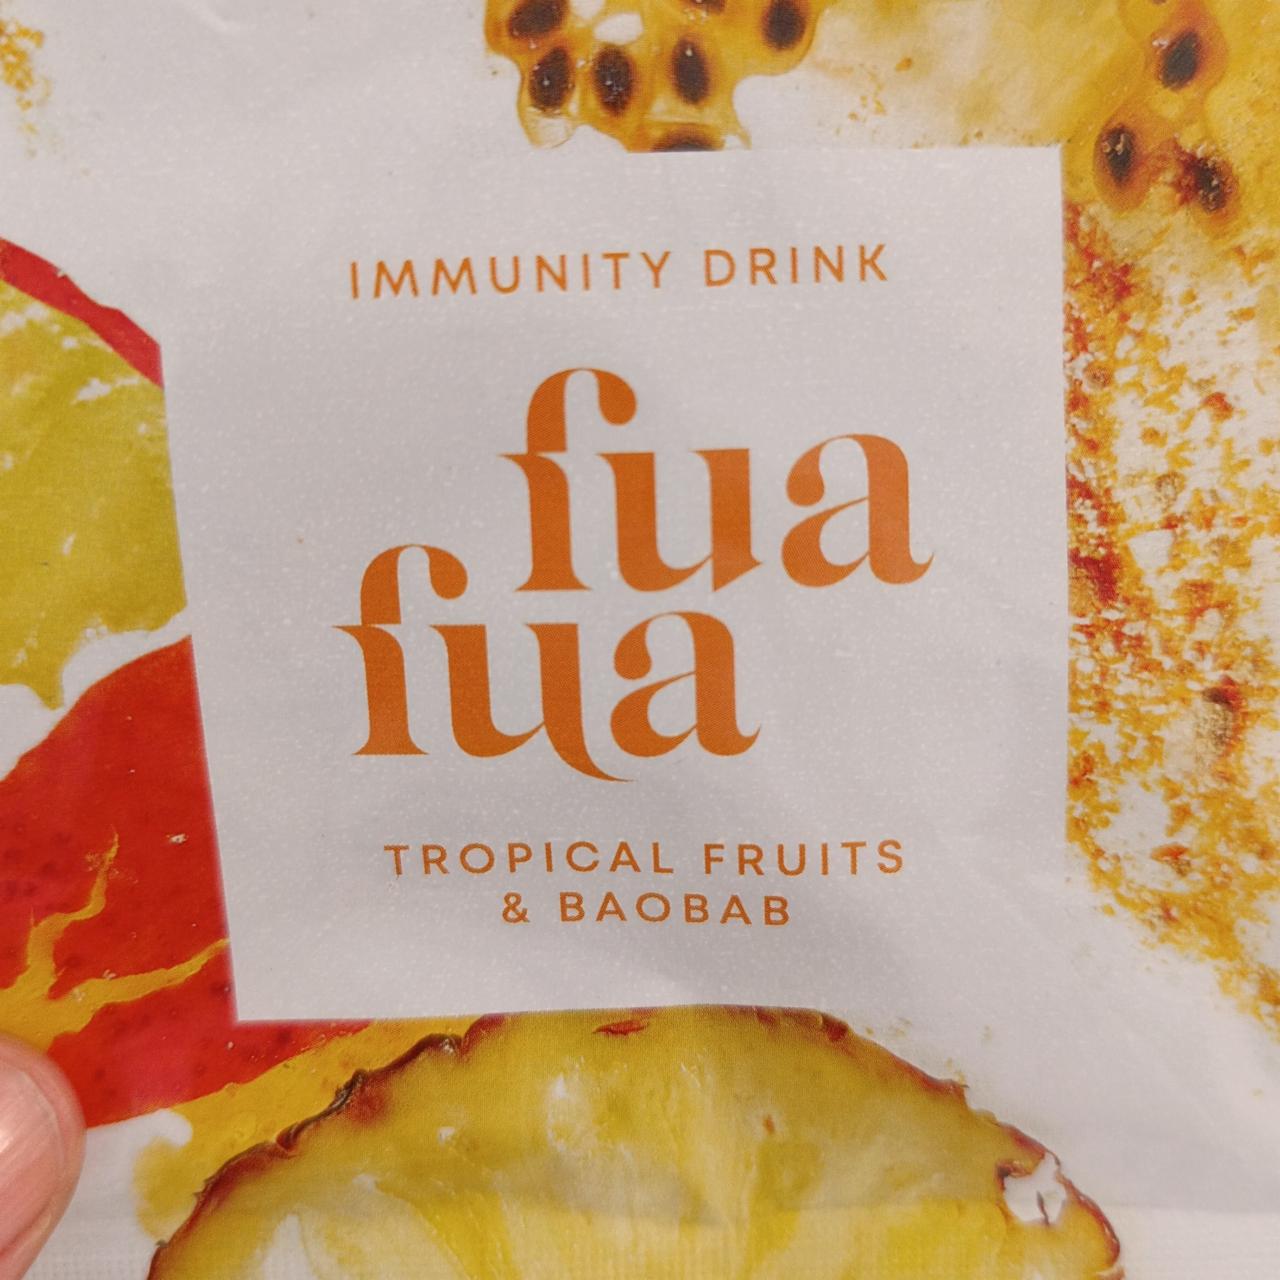 Fotografie - Immunity drink Tropical Fruits & Baobab Fua Fua